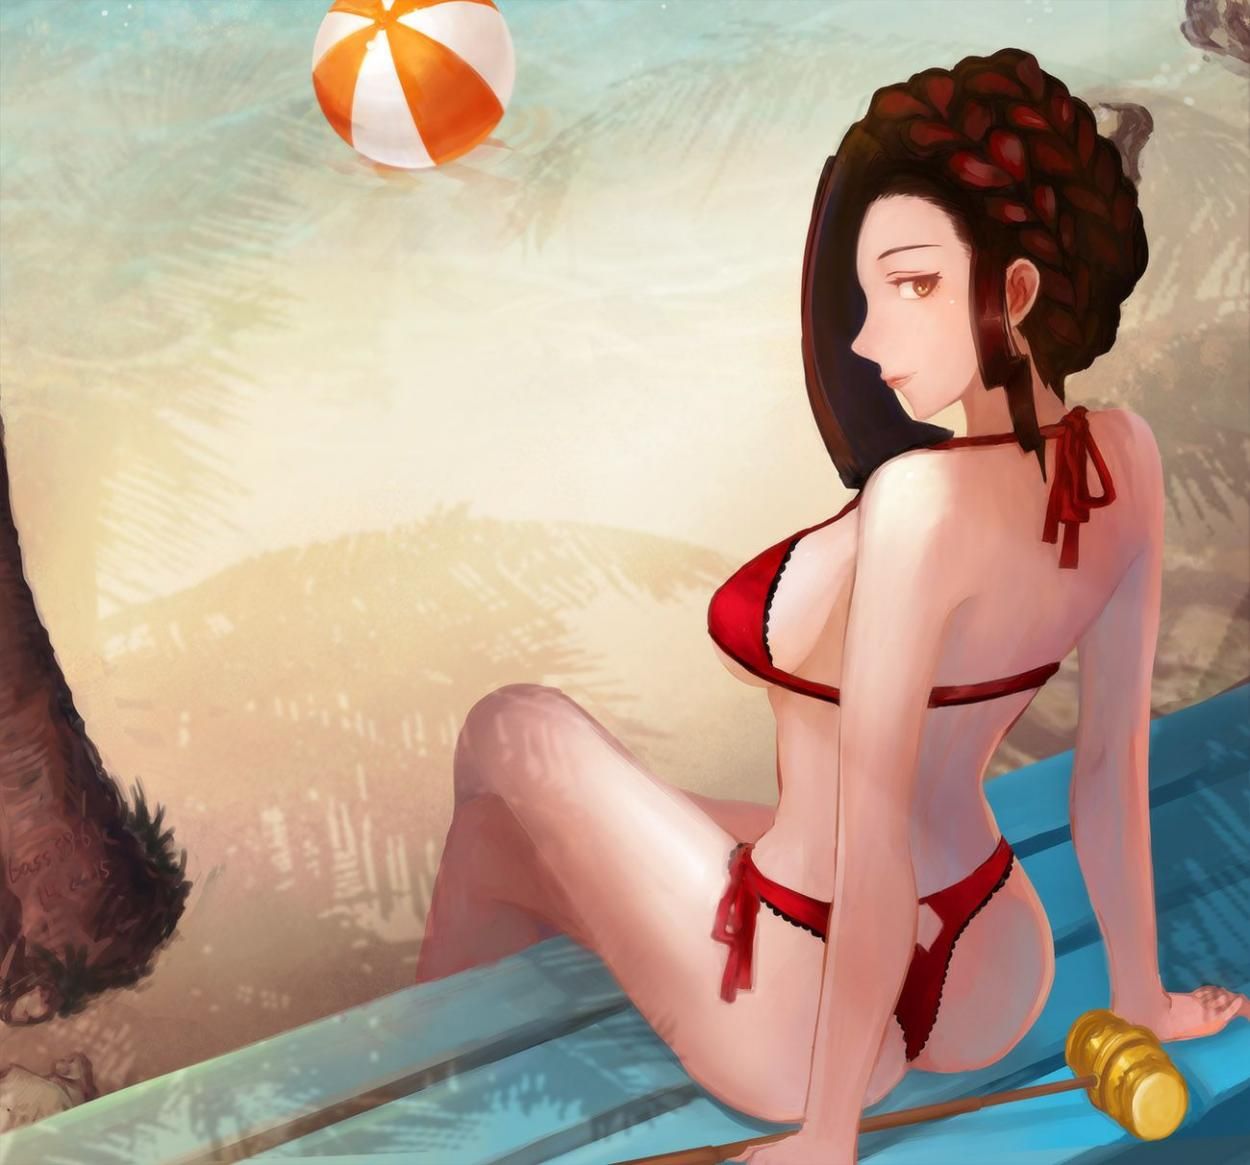 19 erotic images of water balance of gyakuten Kenji 2 (Ace Attorney series) 3